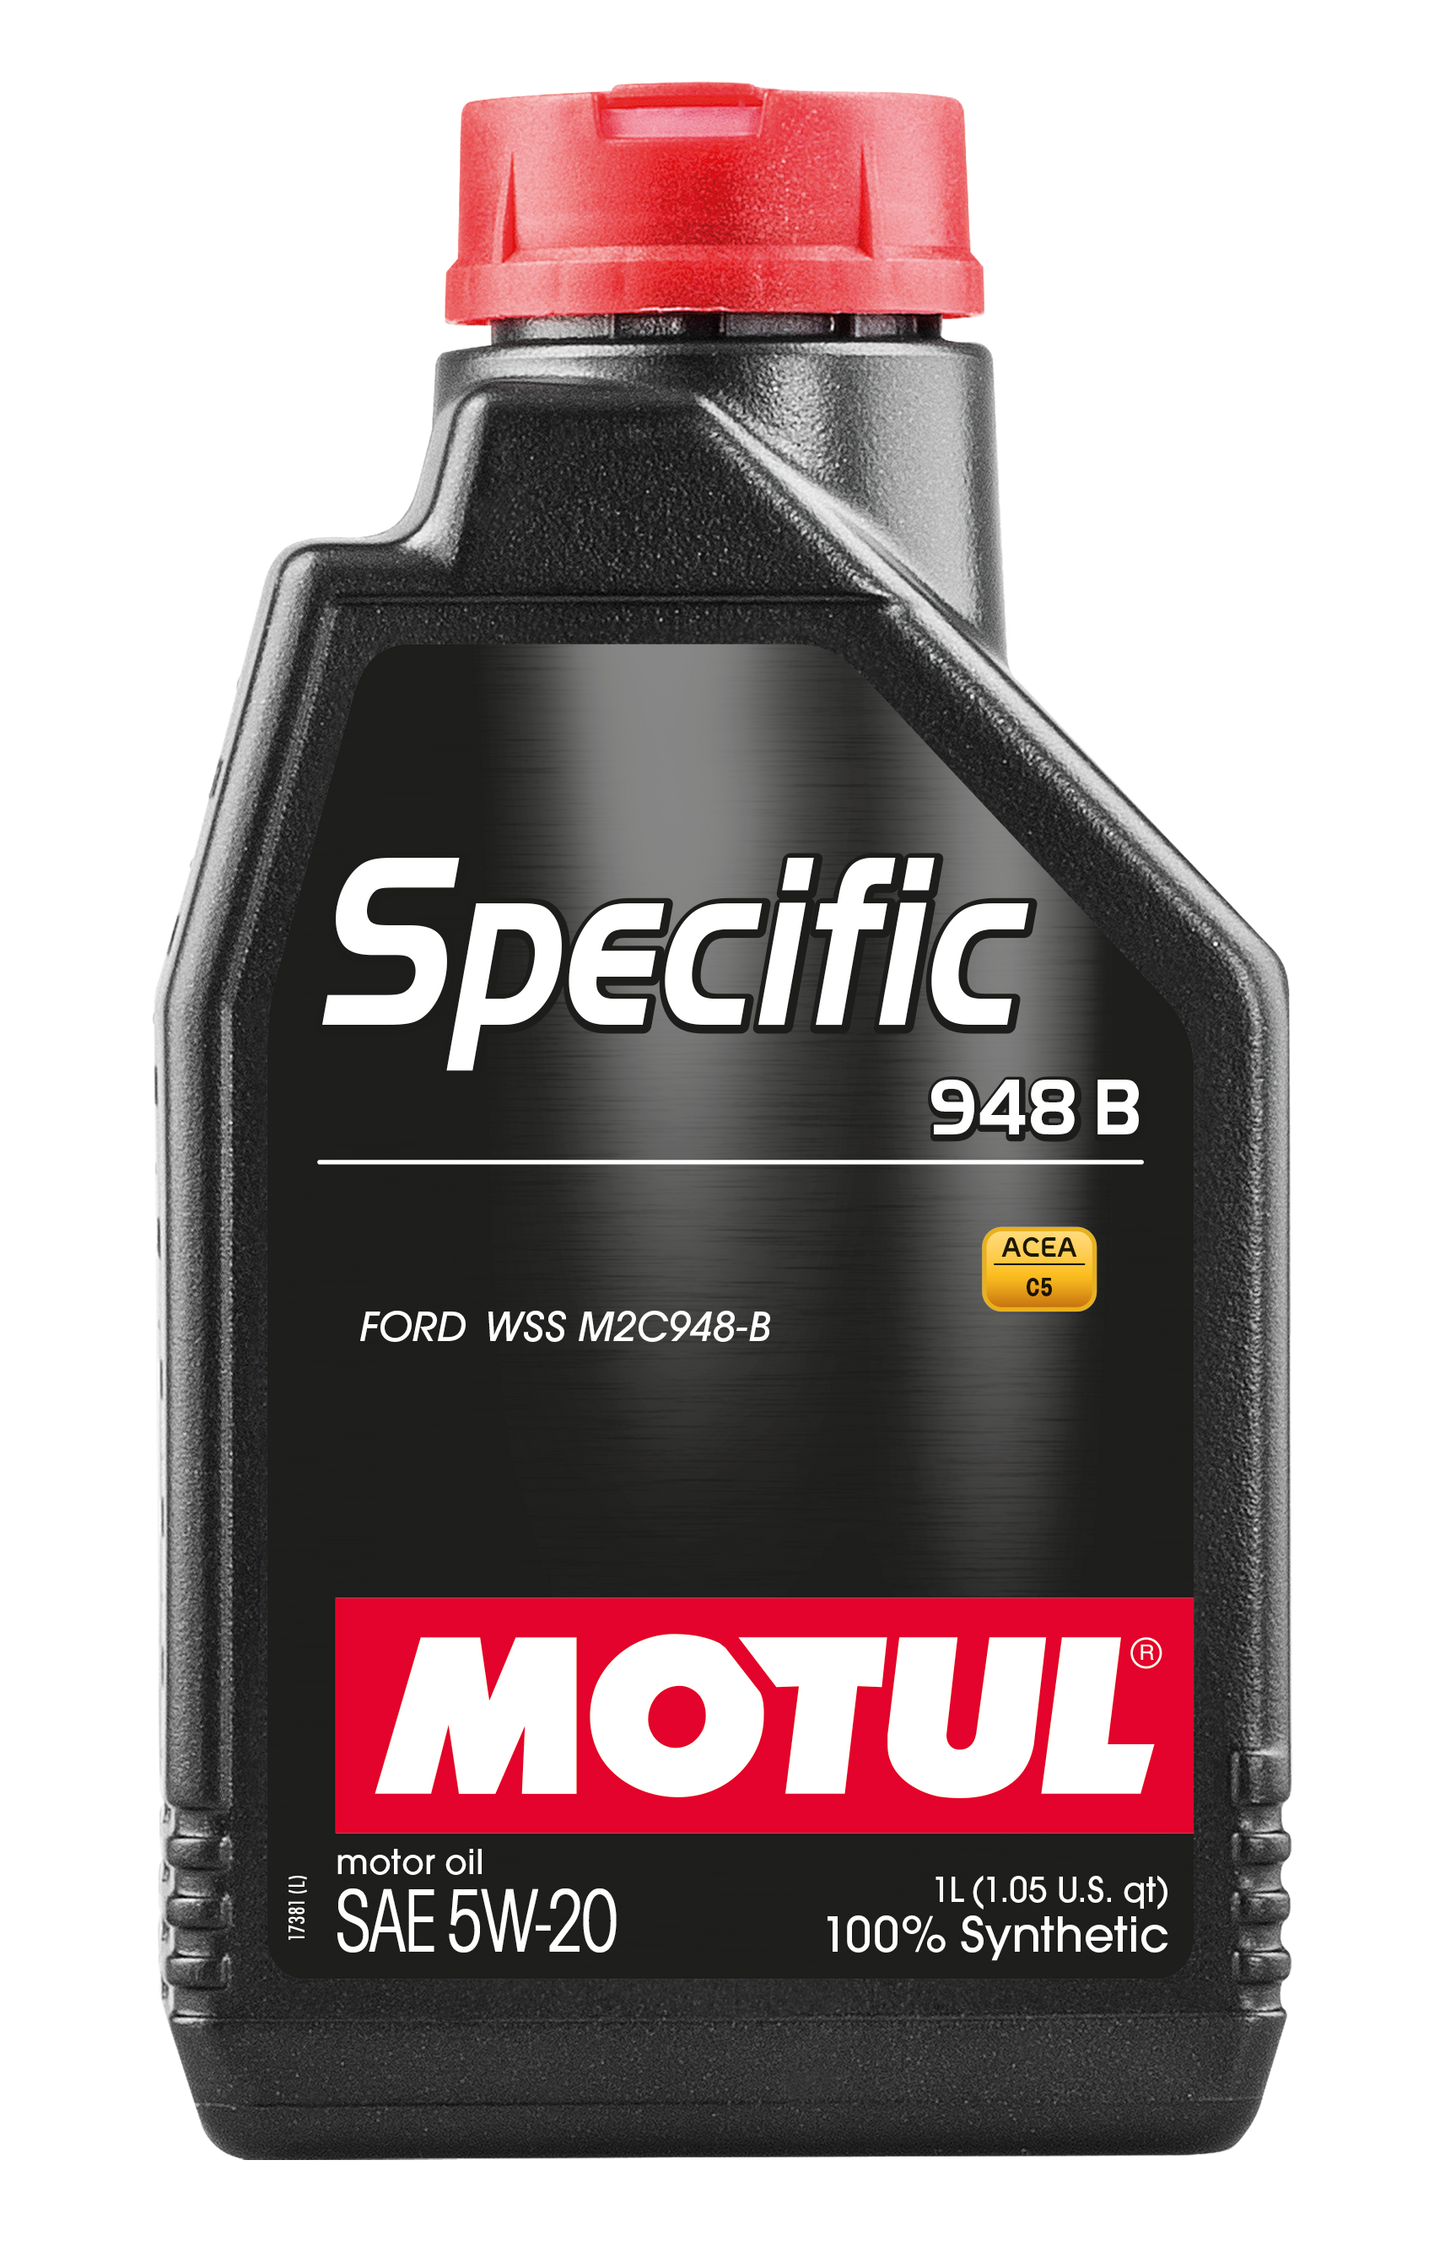 Motul SPECIFIC 948B 5W-20, 1 liter